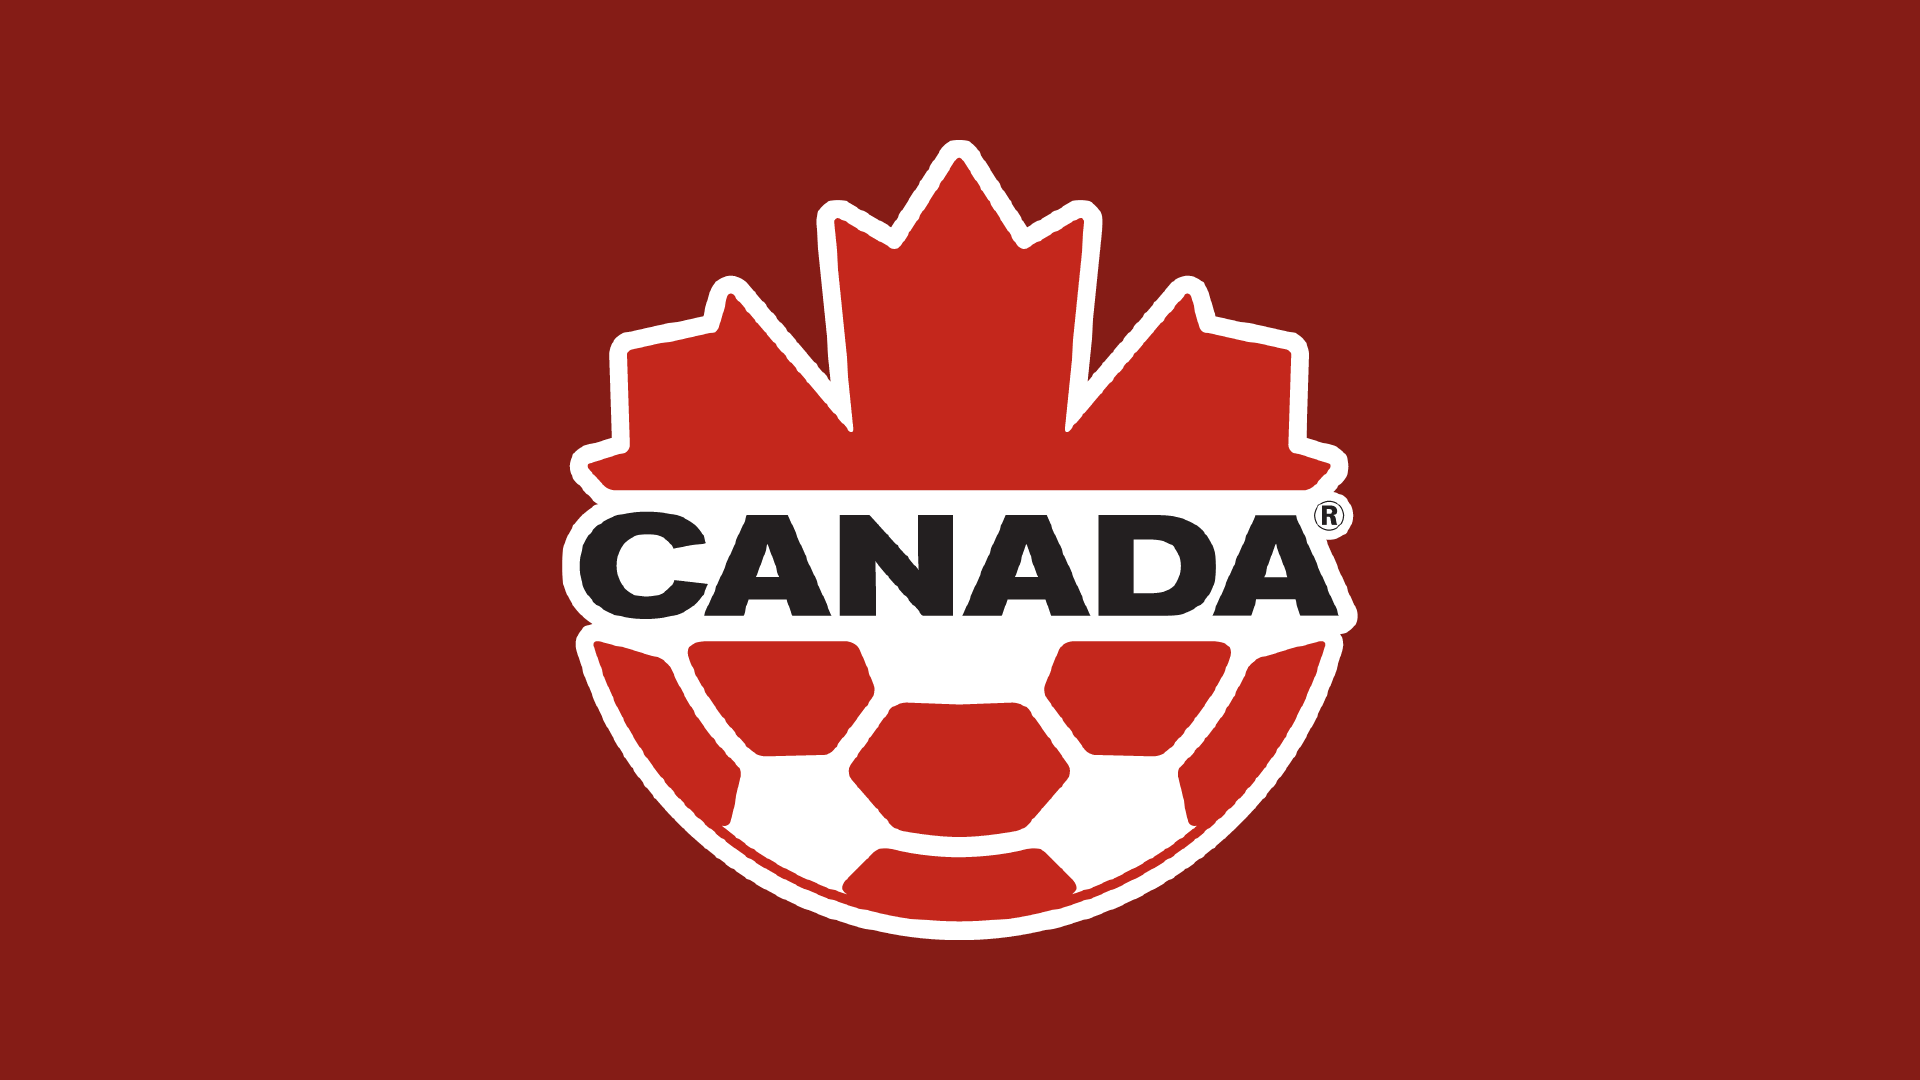 Canada international friendly vs. Panama canceled